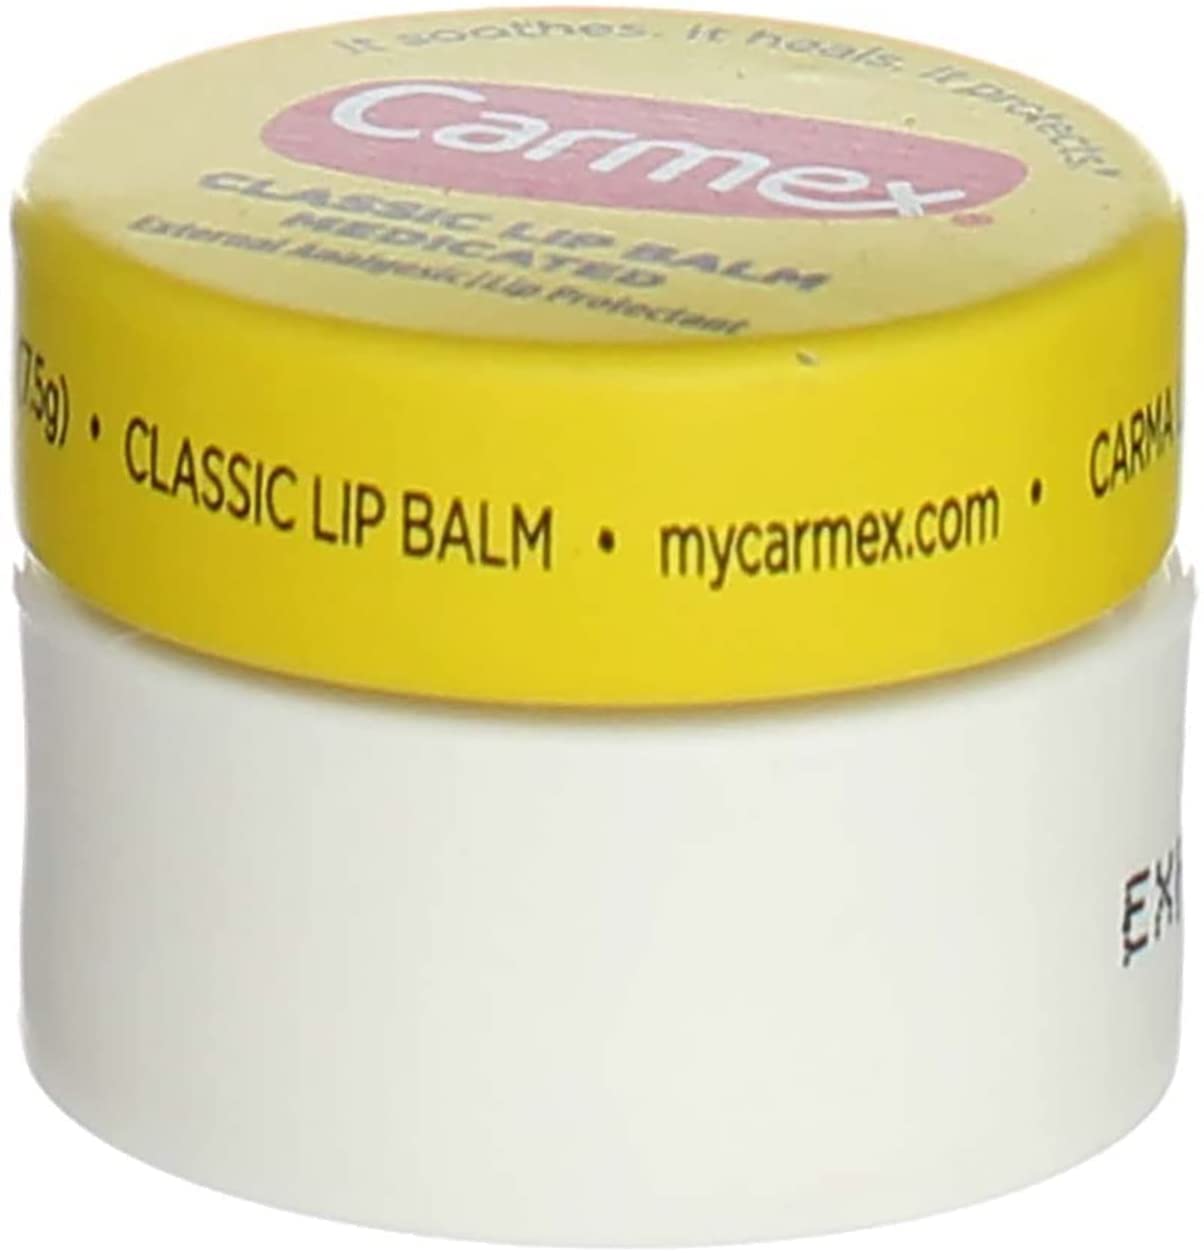 Carmex Classic Lip Balm Medicated 0.25 oz (Packs of 6)